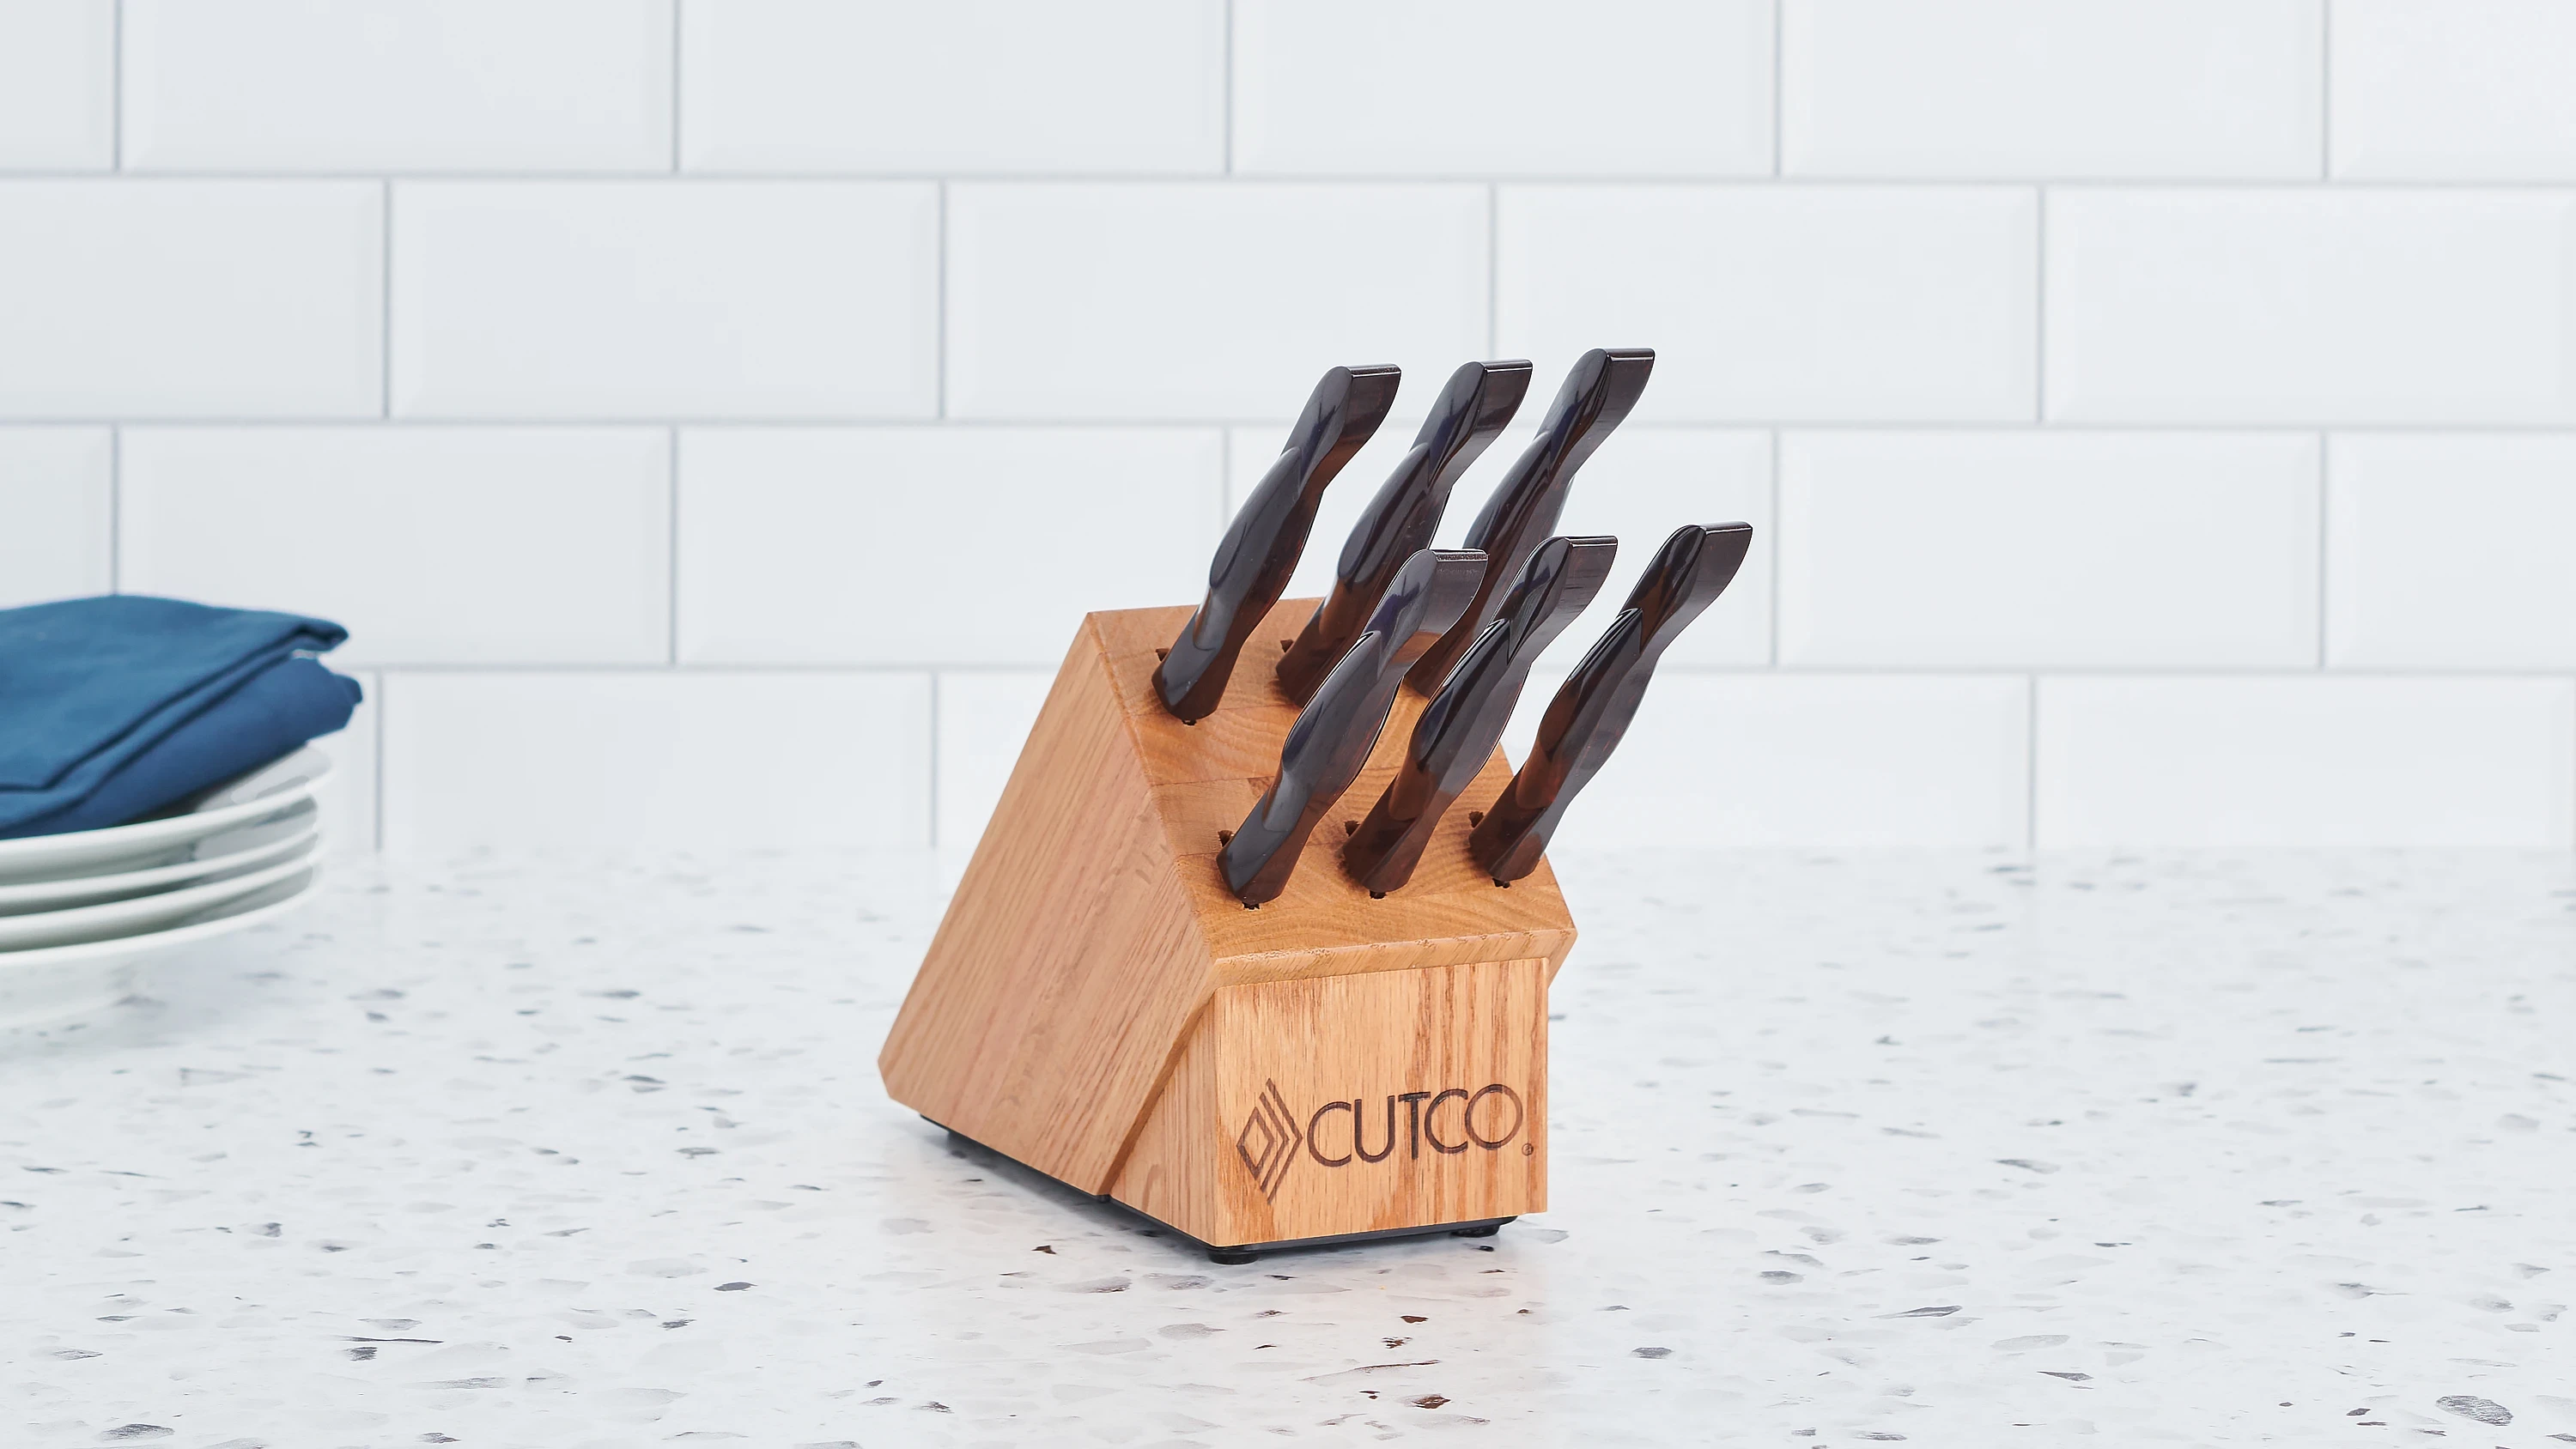 Cutco Cutlery (@CutcoCutlery) / X